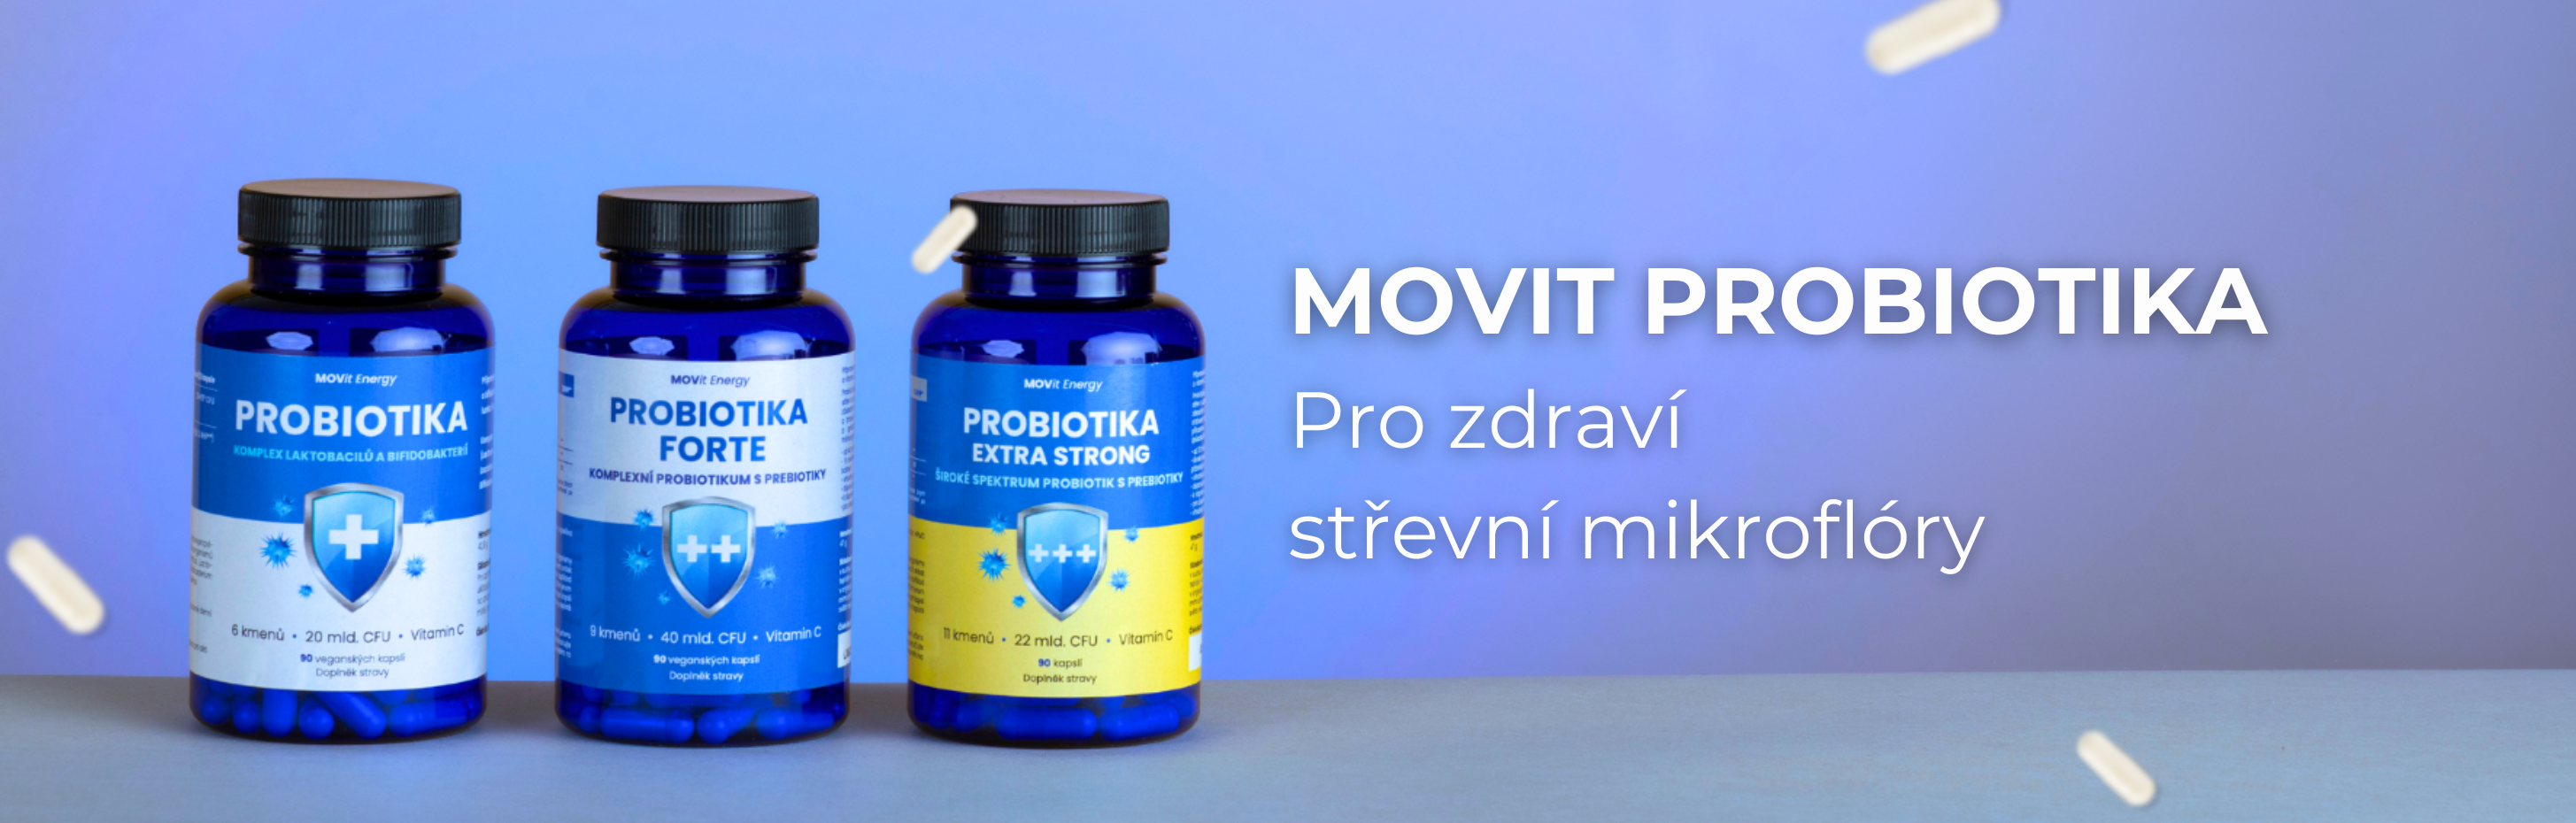 Probiotiká MOVit Probiotiká - komplex laktobacilov a bifidobaktérií, 90 kapsúl